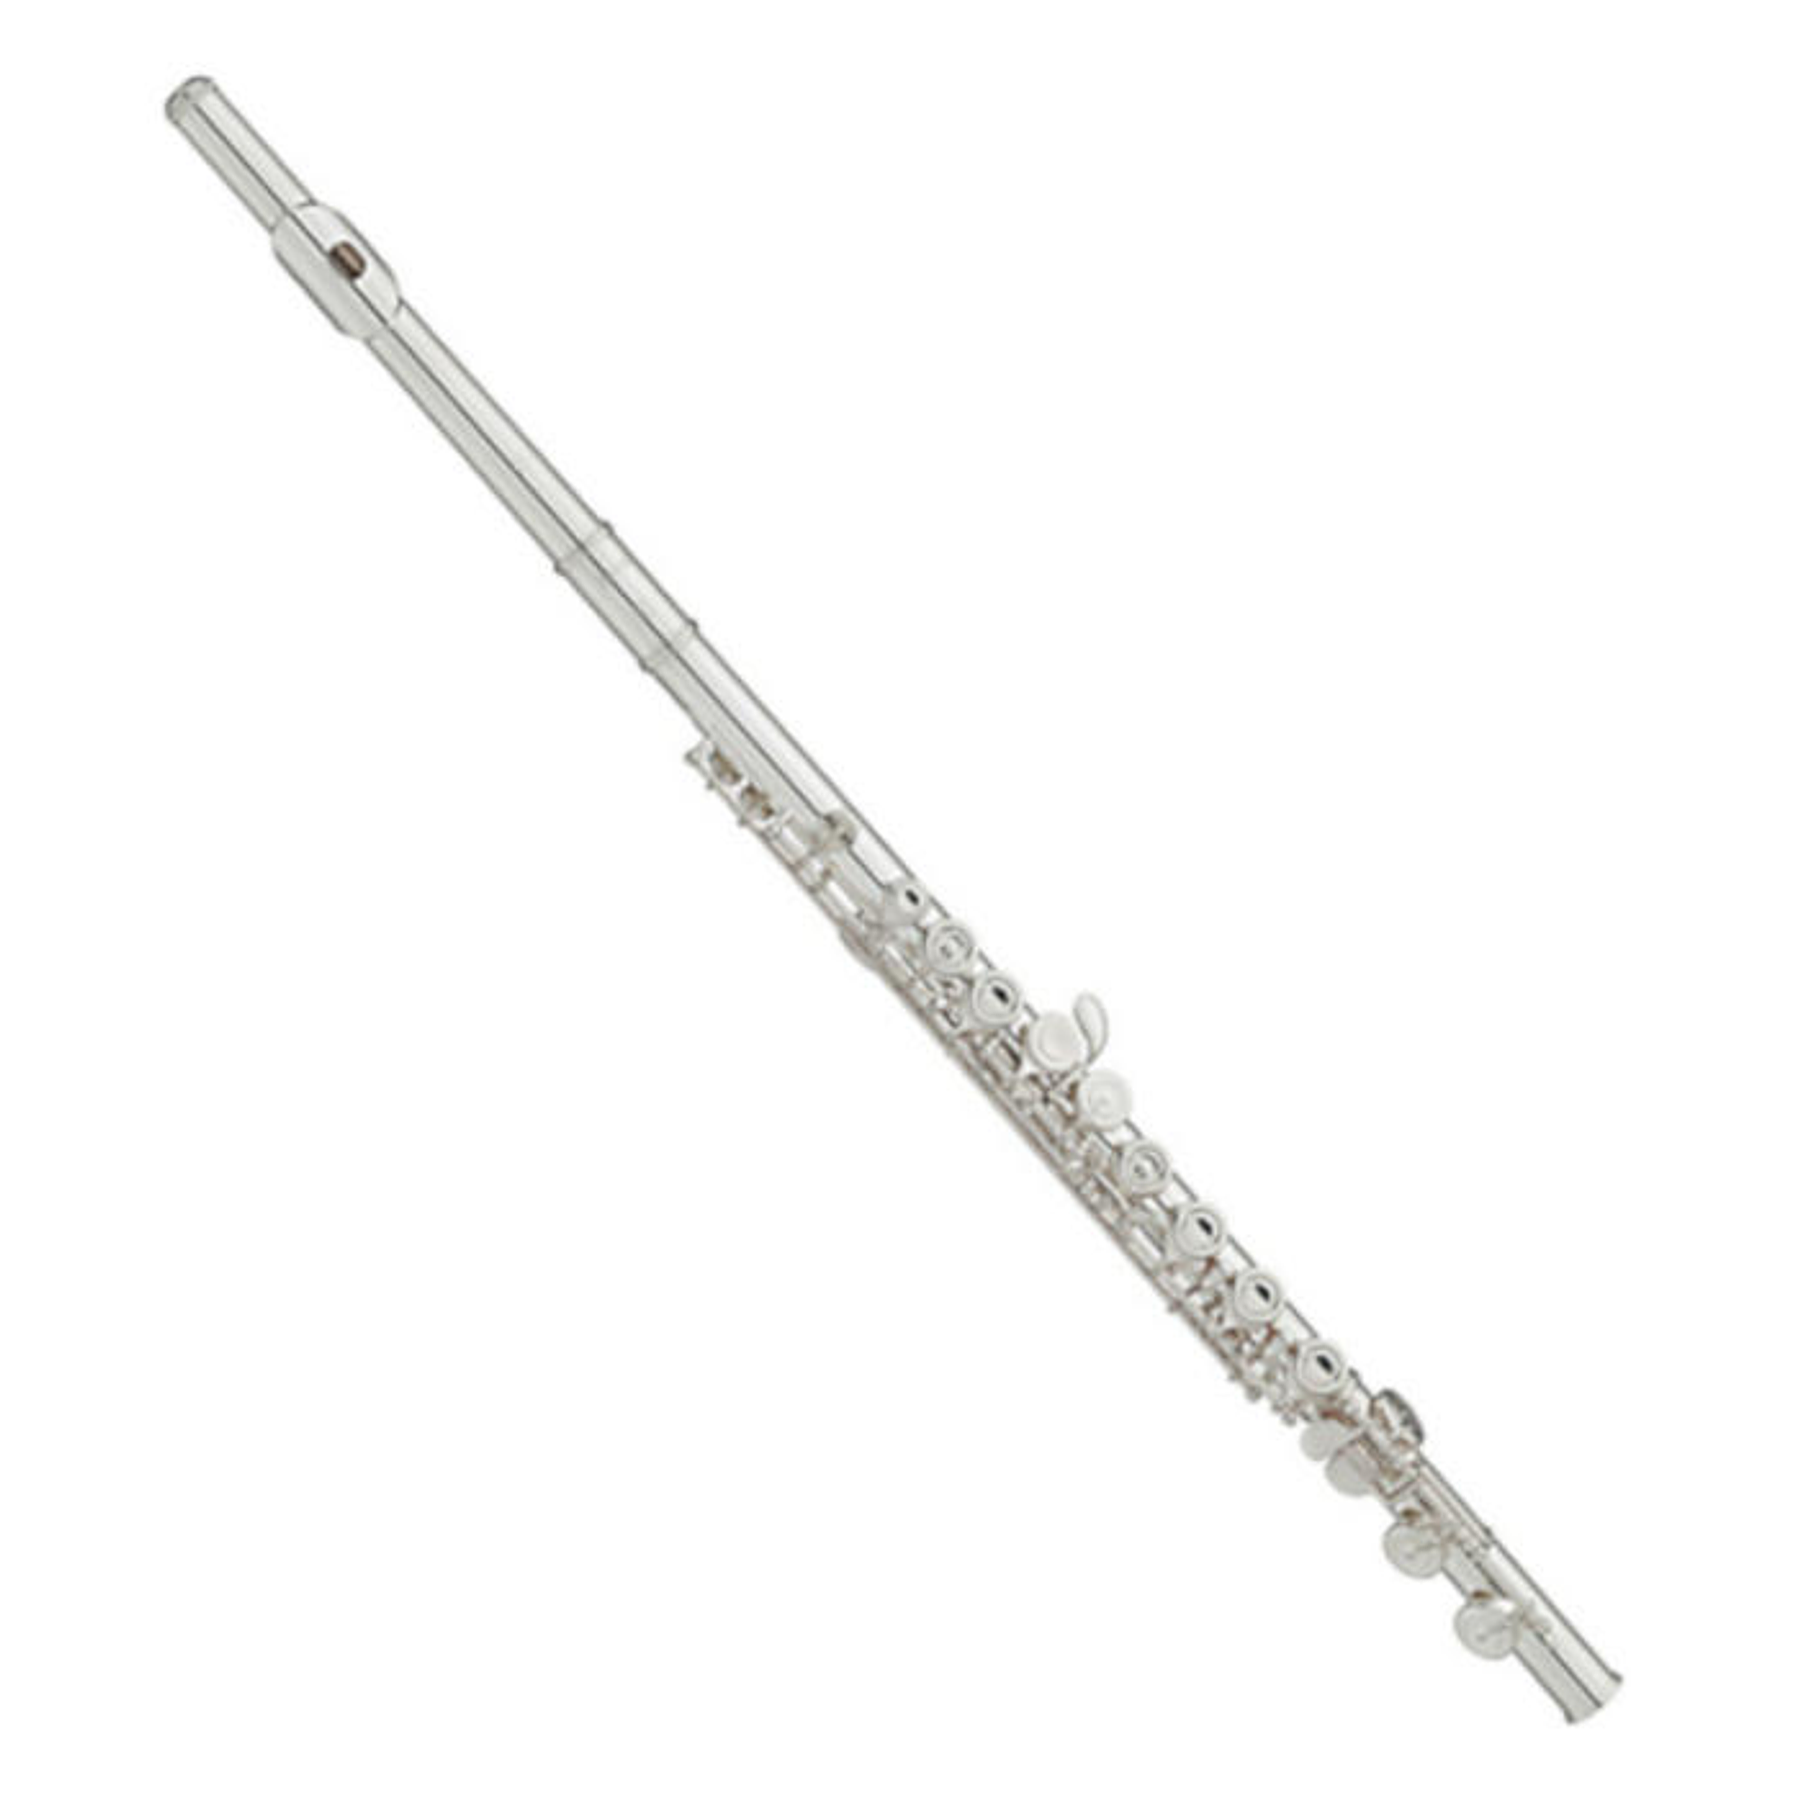 Flauta traversa Yamaha YFL-222